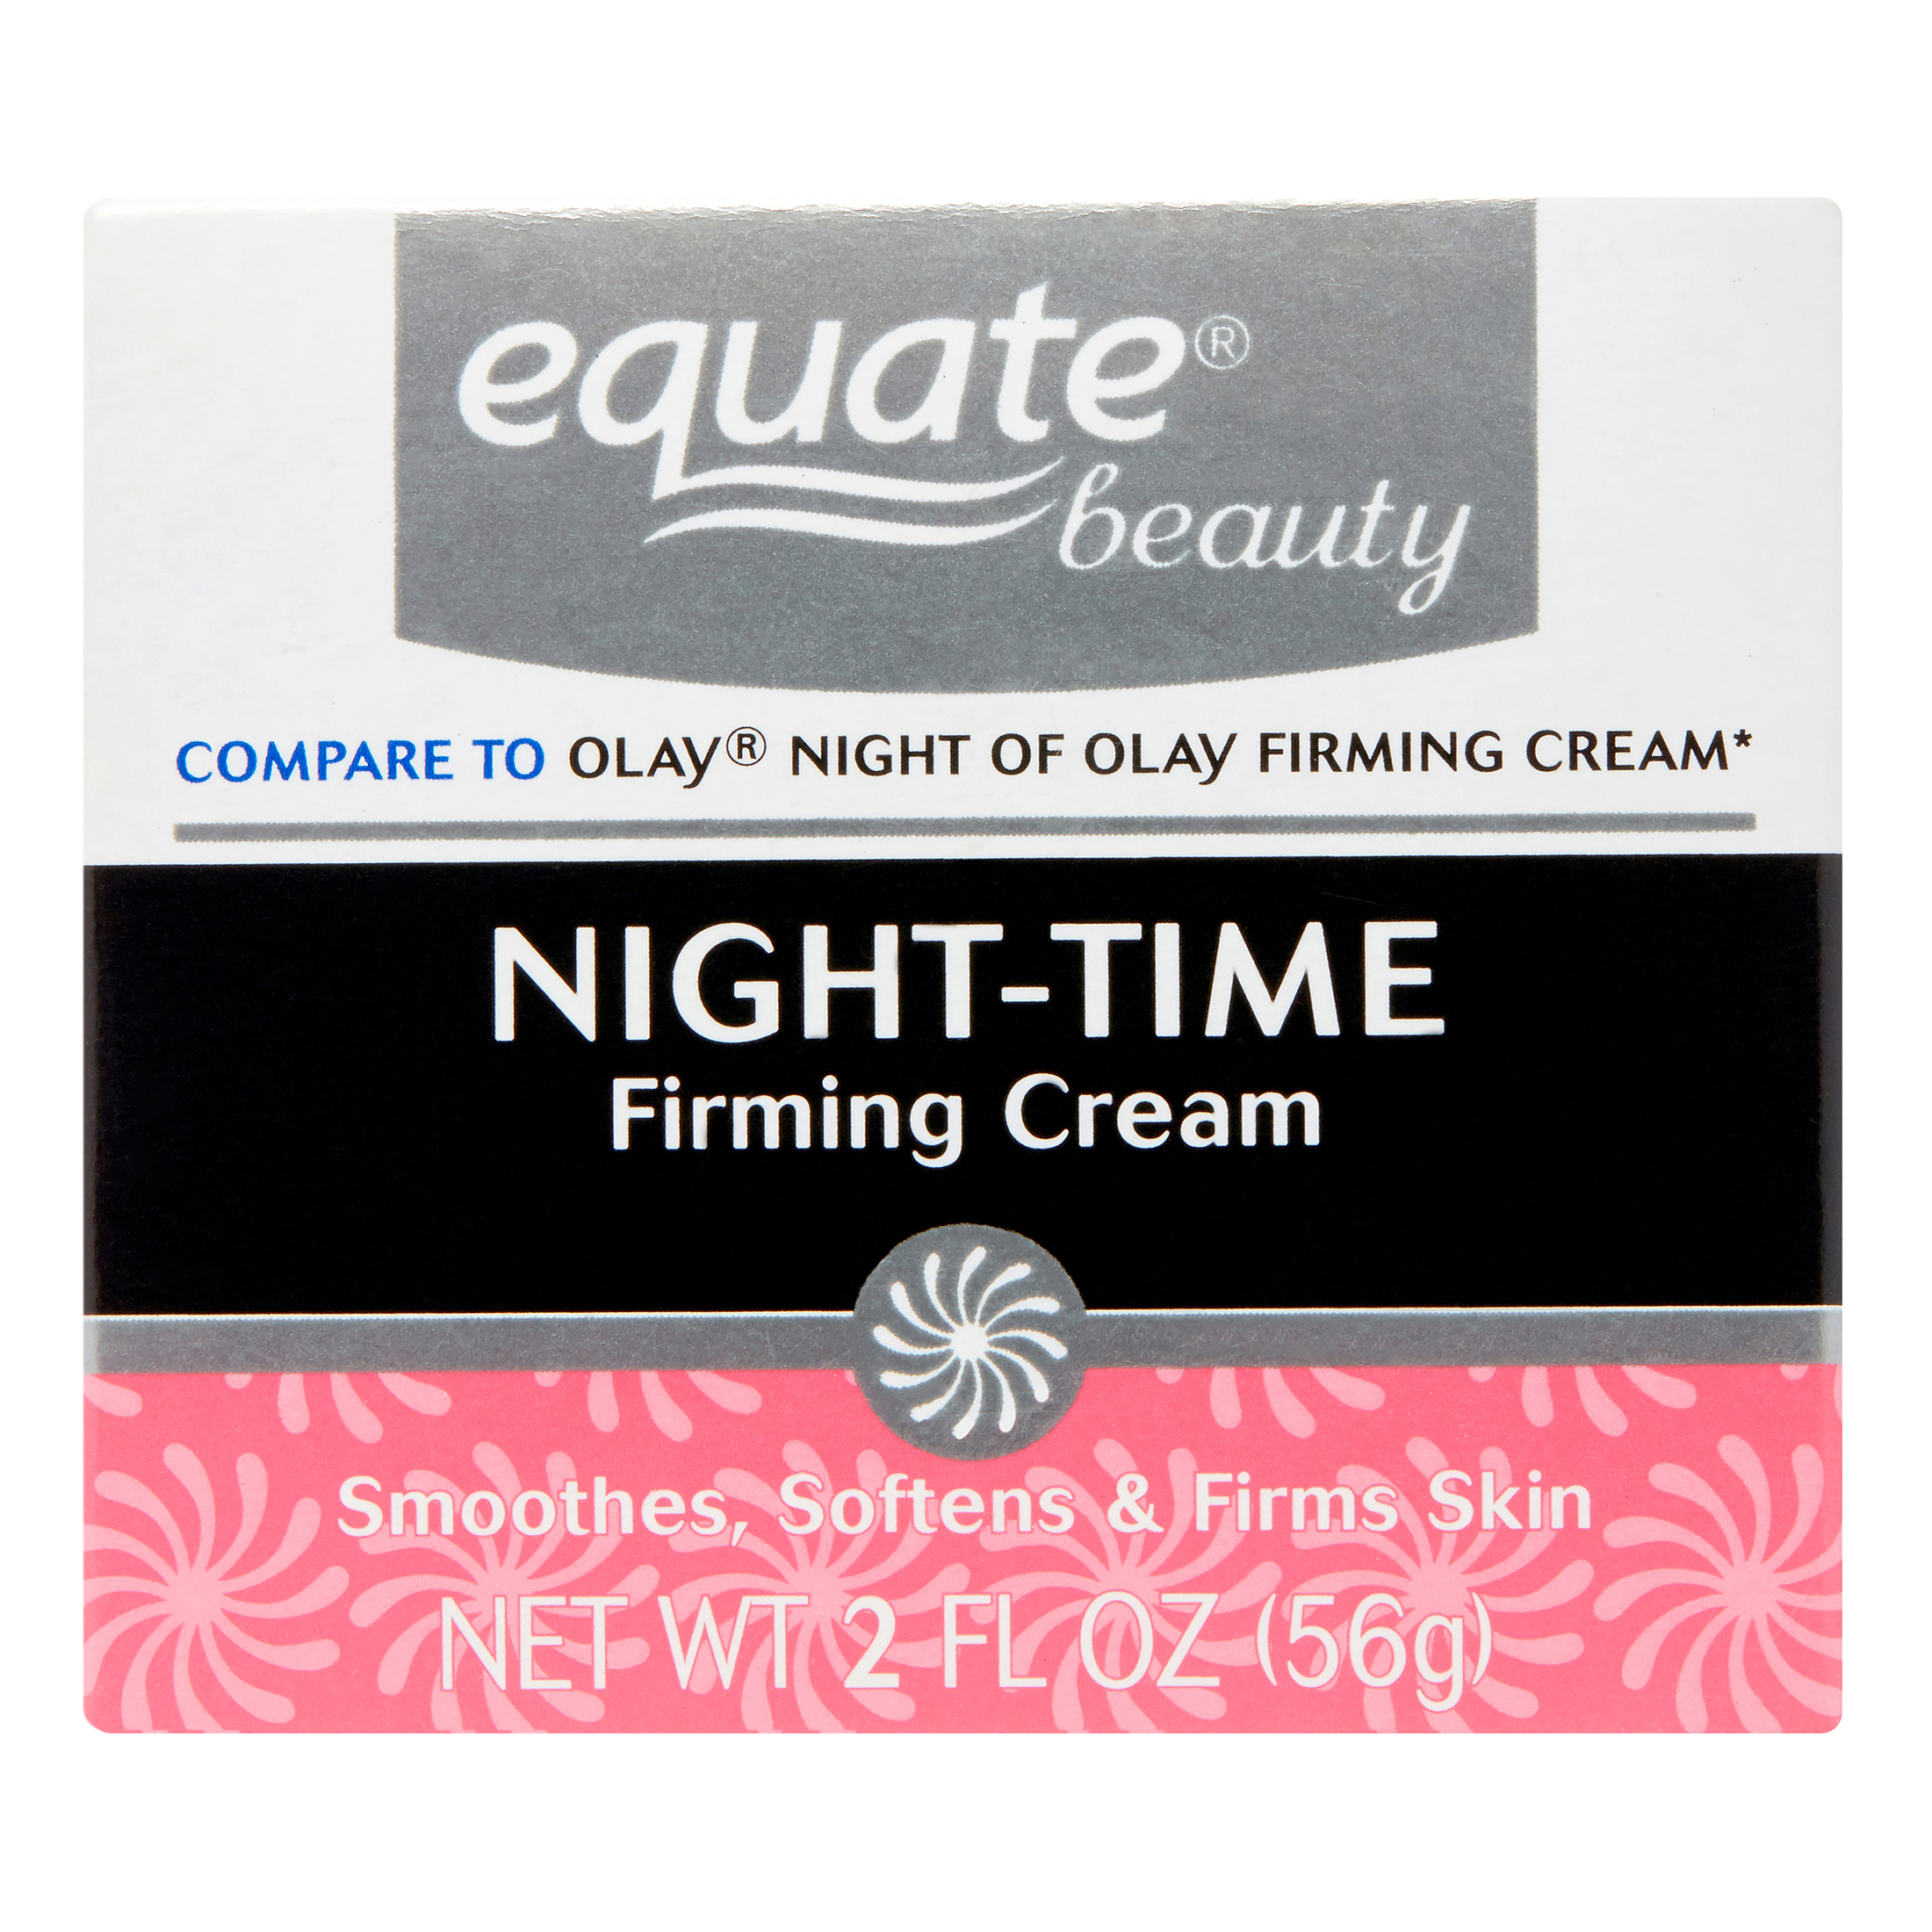 Equate Firming Night Cream Face Moisturizer, 2 oz - image 5 of 9